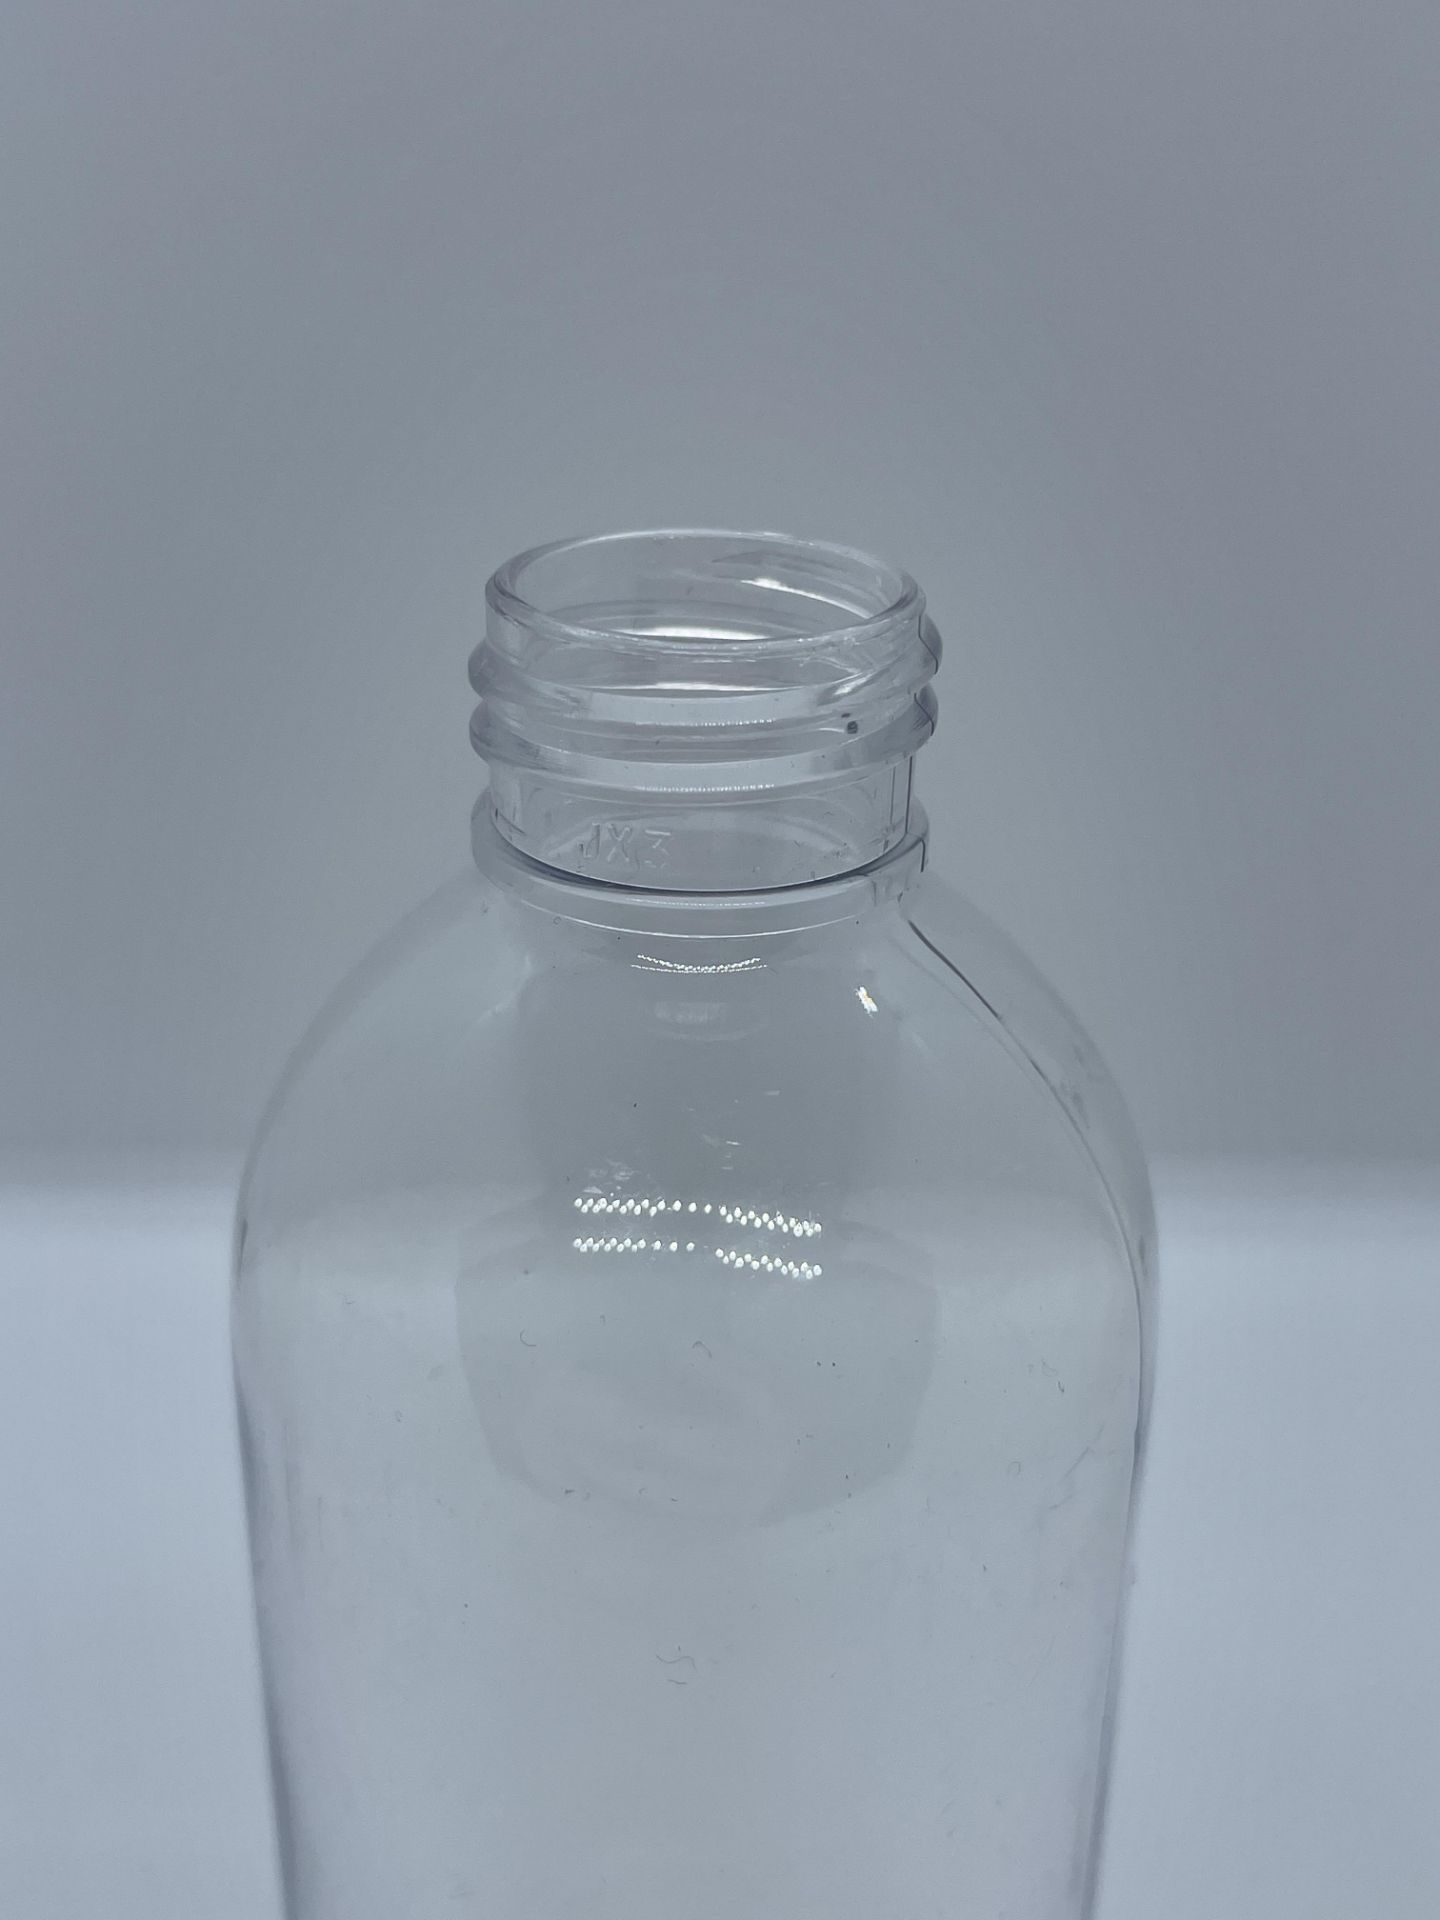 75,000 - Clear Plastic Bullet 8 oz Empty Bottles, 24-410 Threading Neck, 6.25" Tall, 2" Diameter - Image 9 of 10